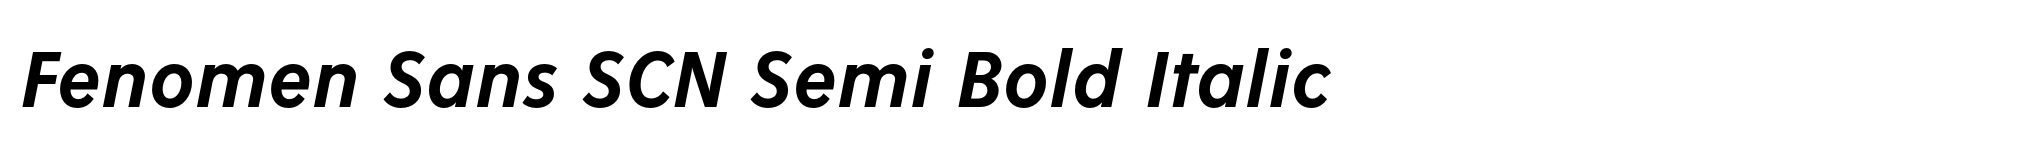 Fenomen Sans SCN Semi Bold Italic image